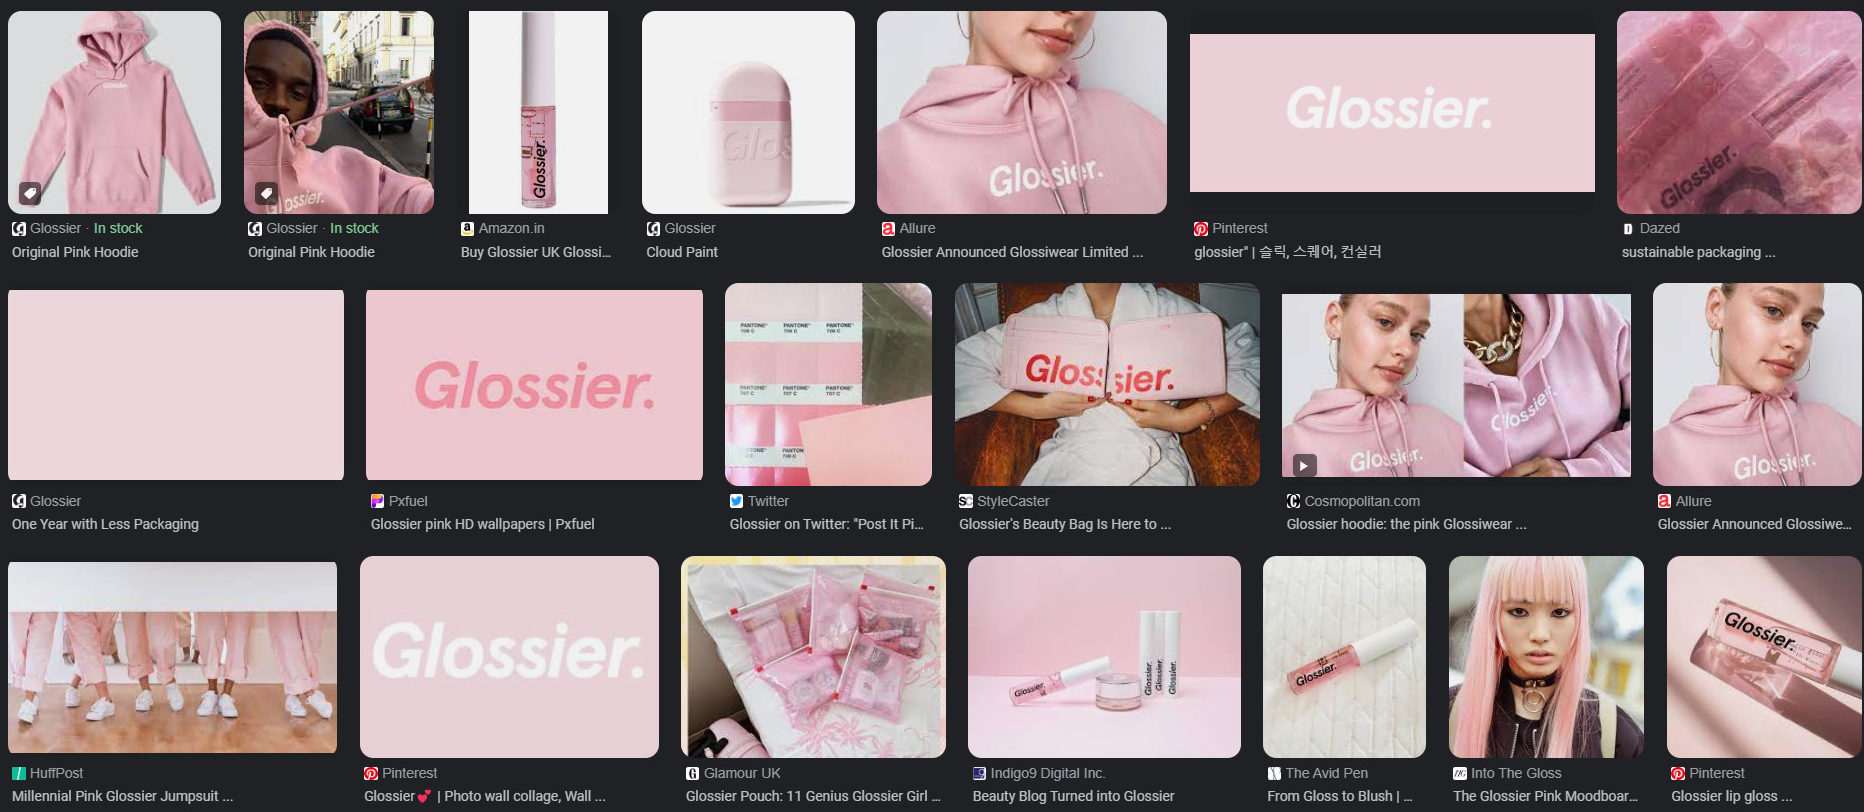 Glossier's brand image